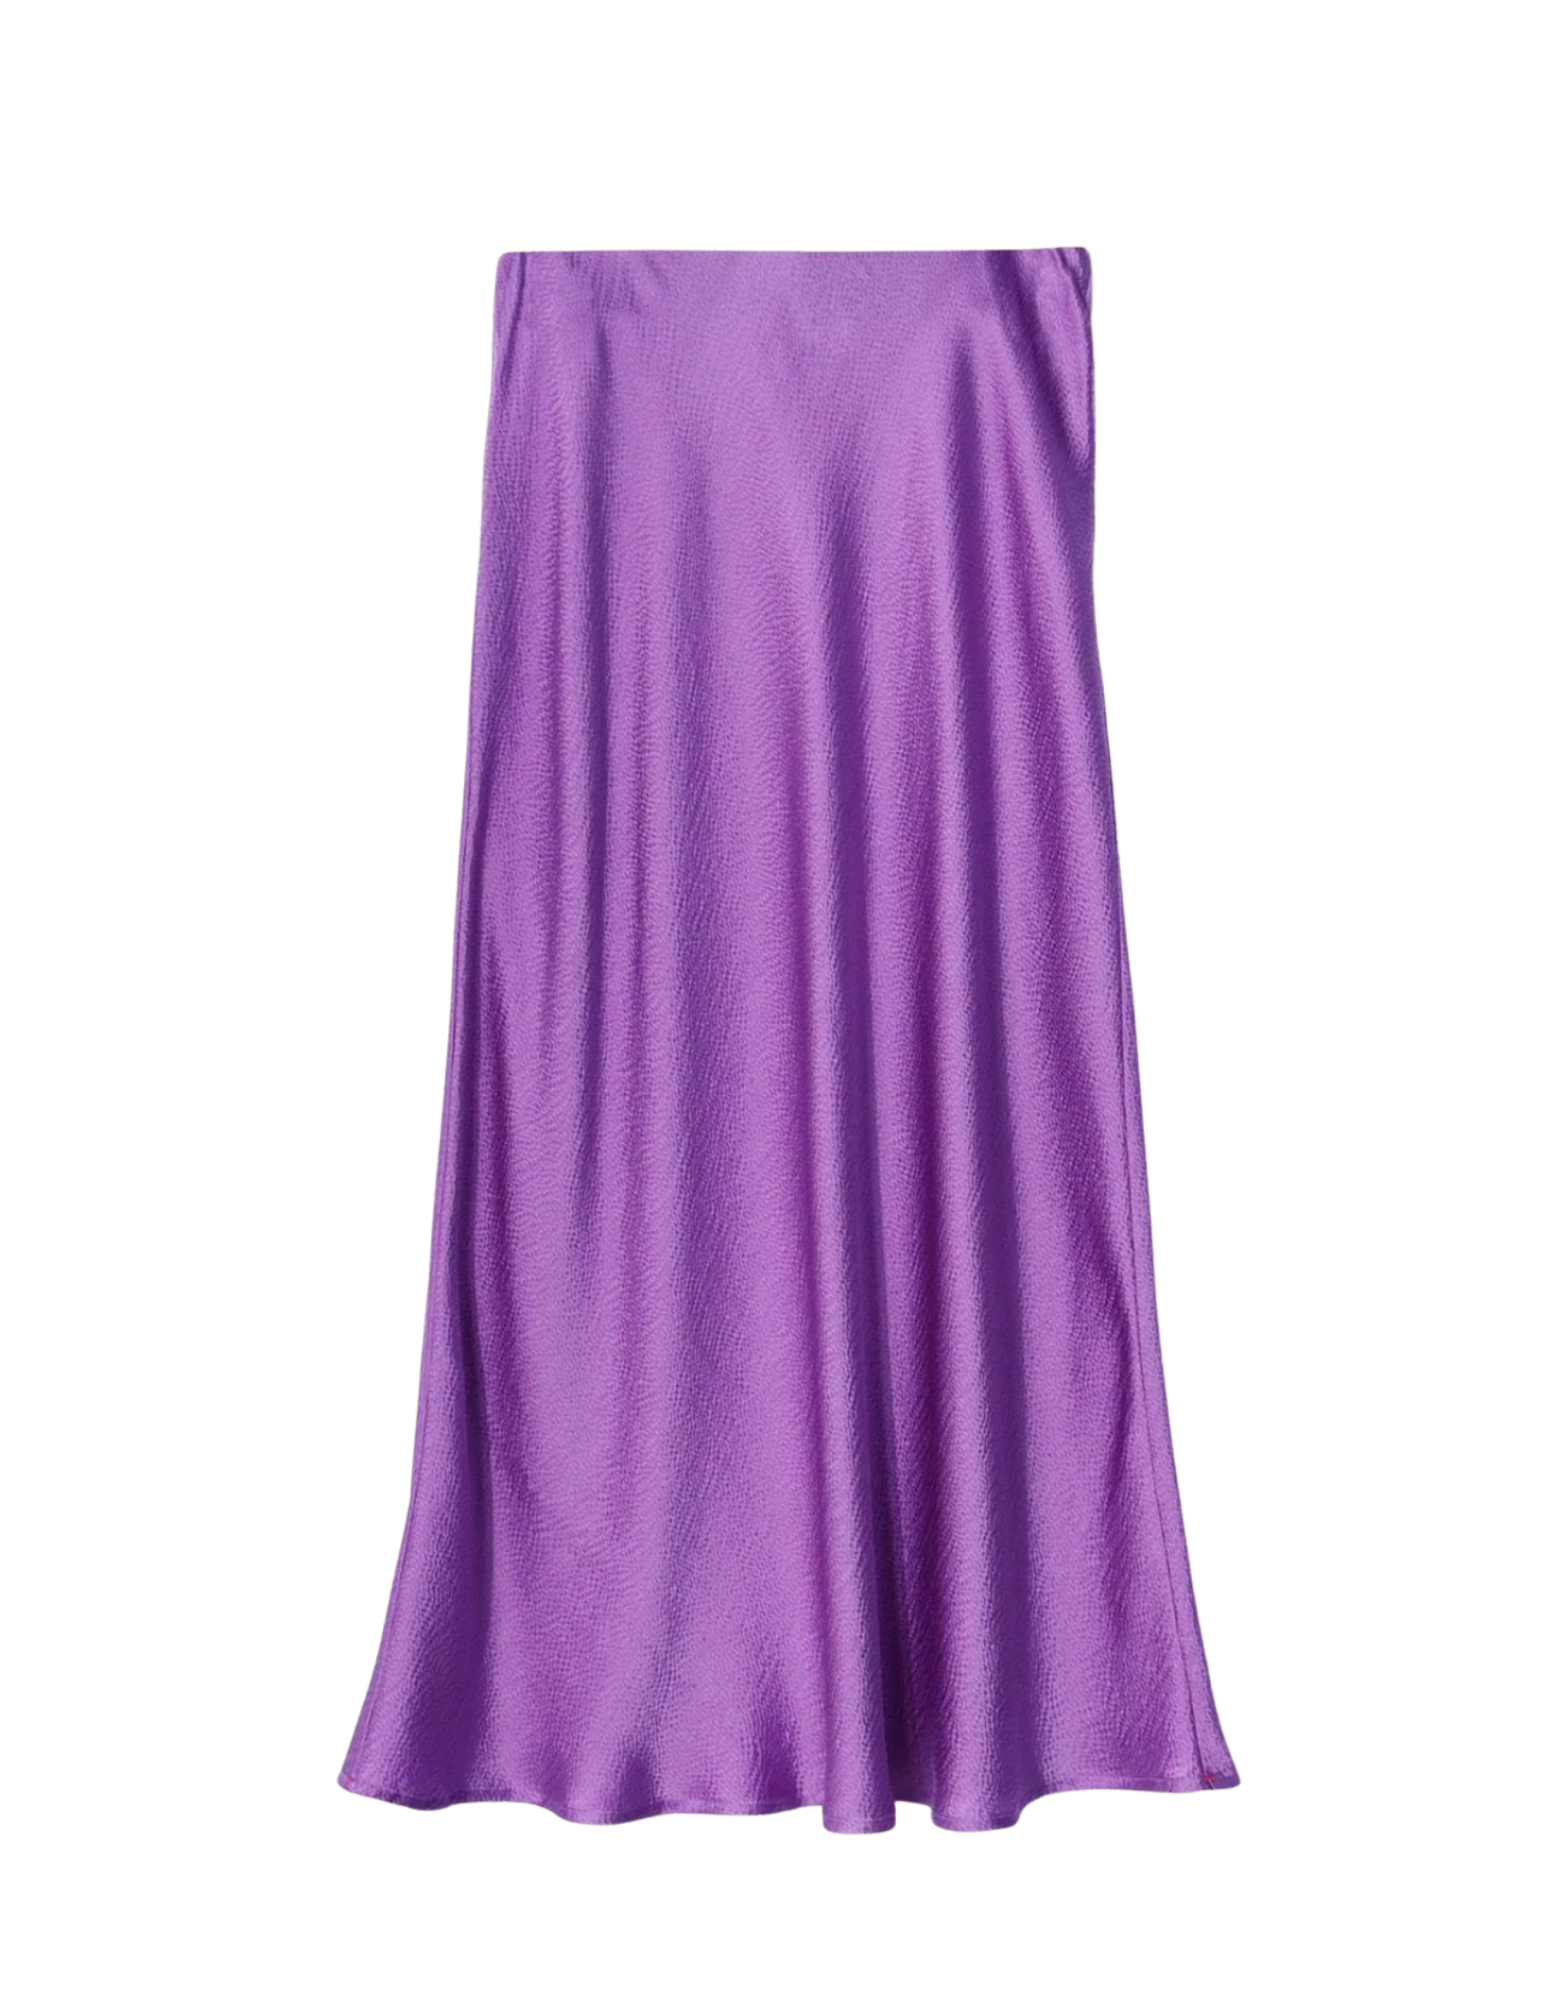 Audrina Skirt-Purple Topaz